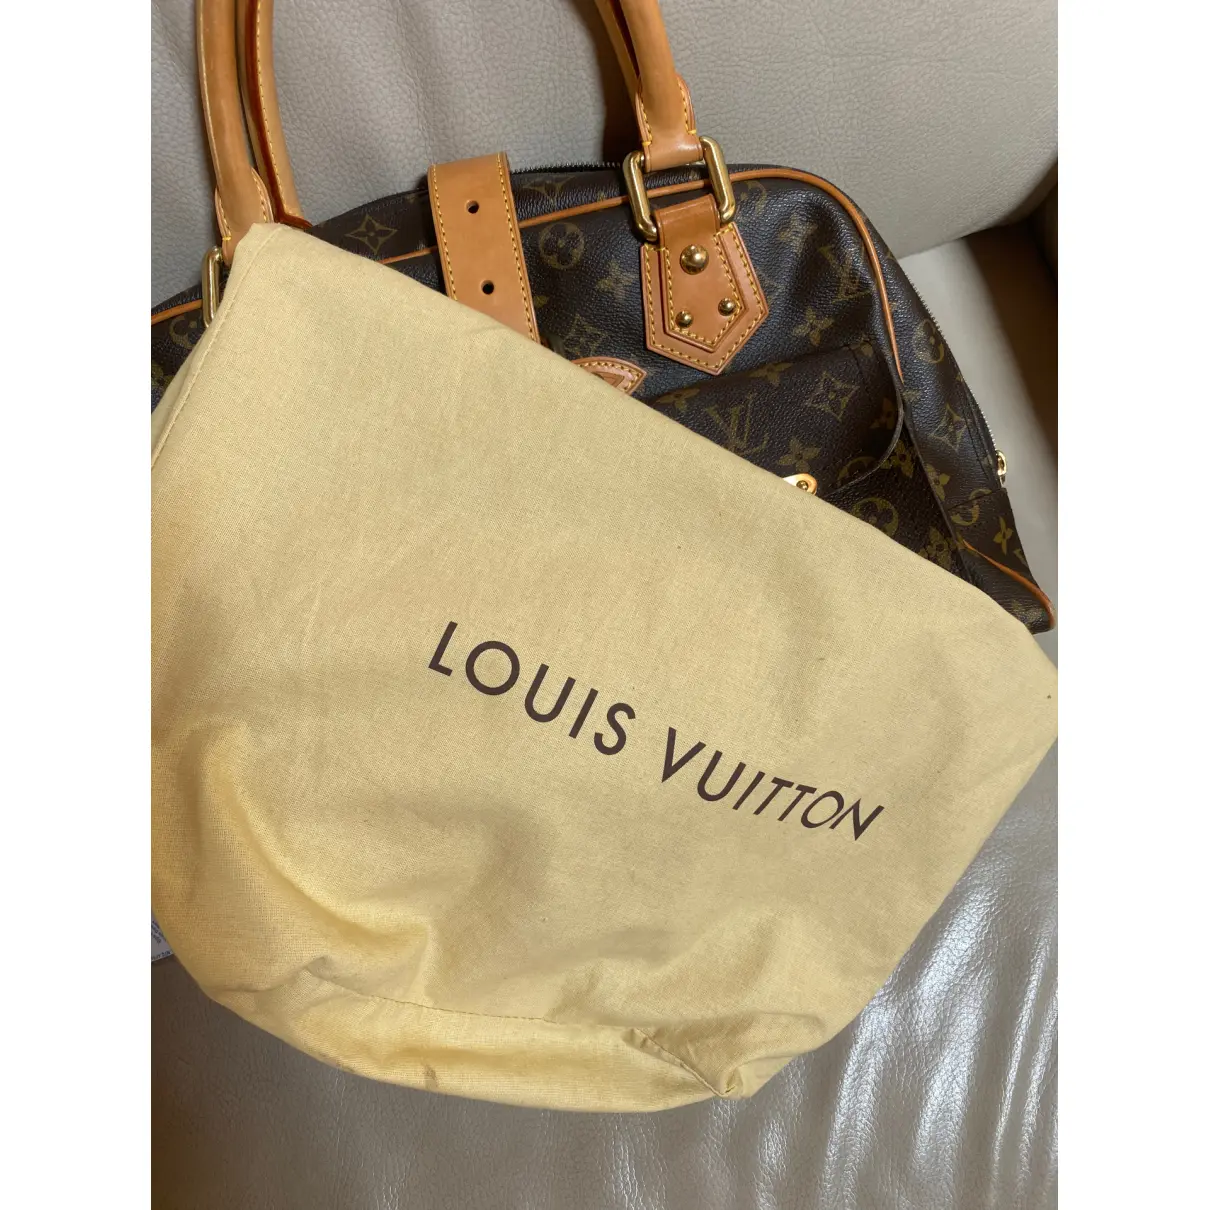 Buy Louis Vuitton Manhattan leather handbag online - Vintage